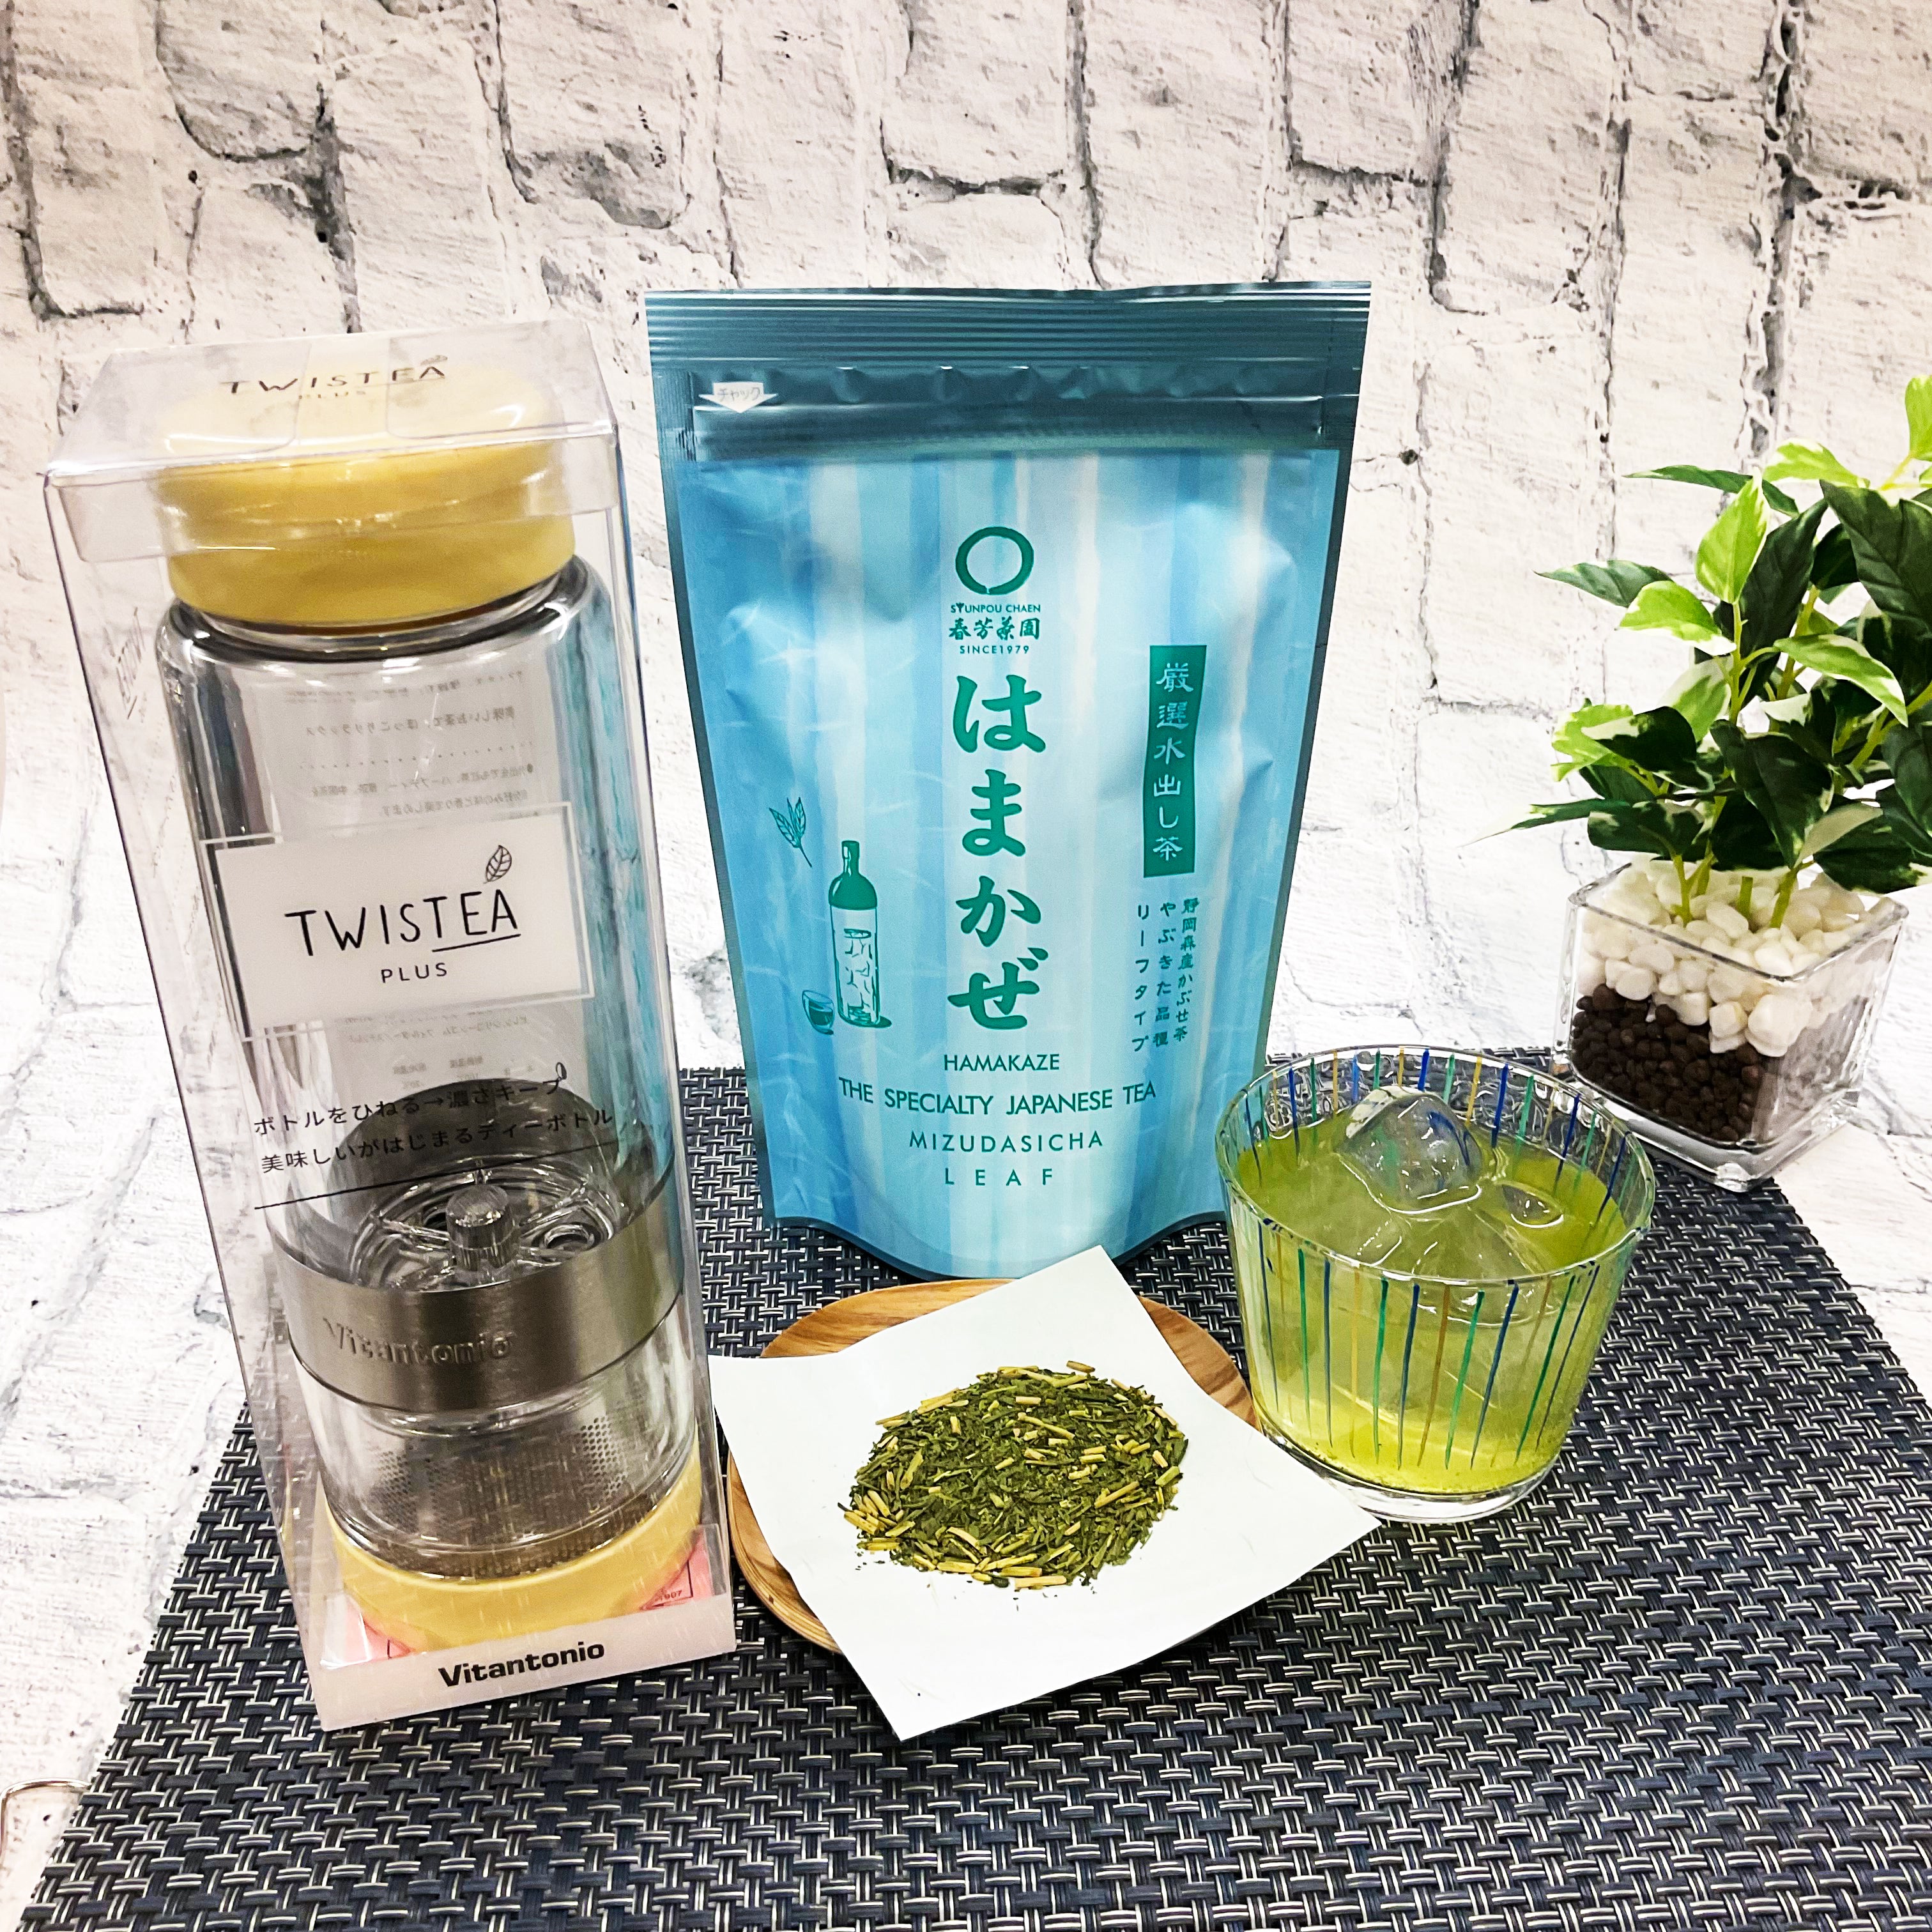 Twisty Plus & Cold Brew Green Tea "Hamakaze" Set